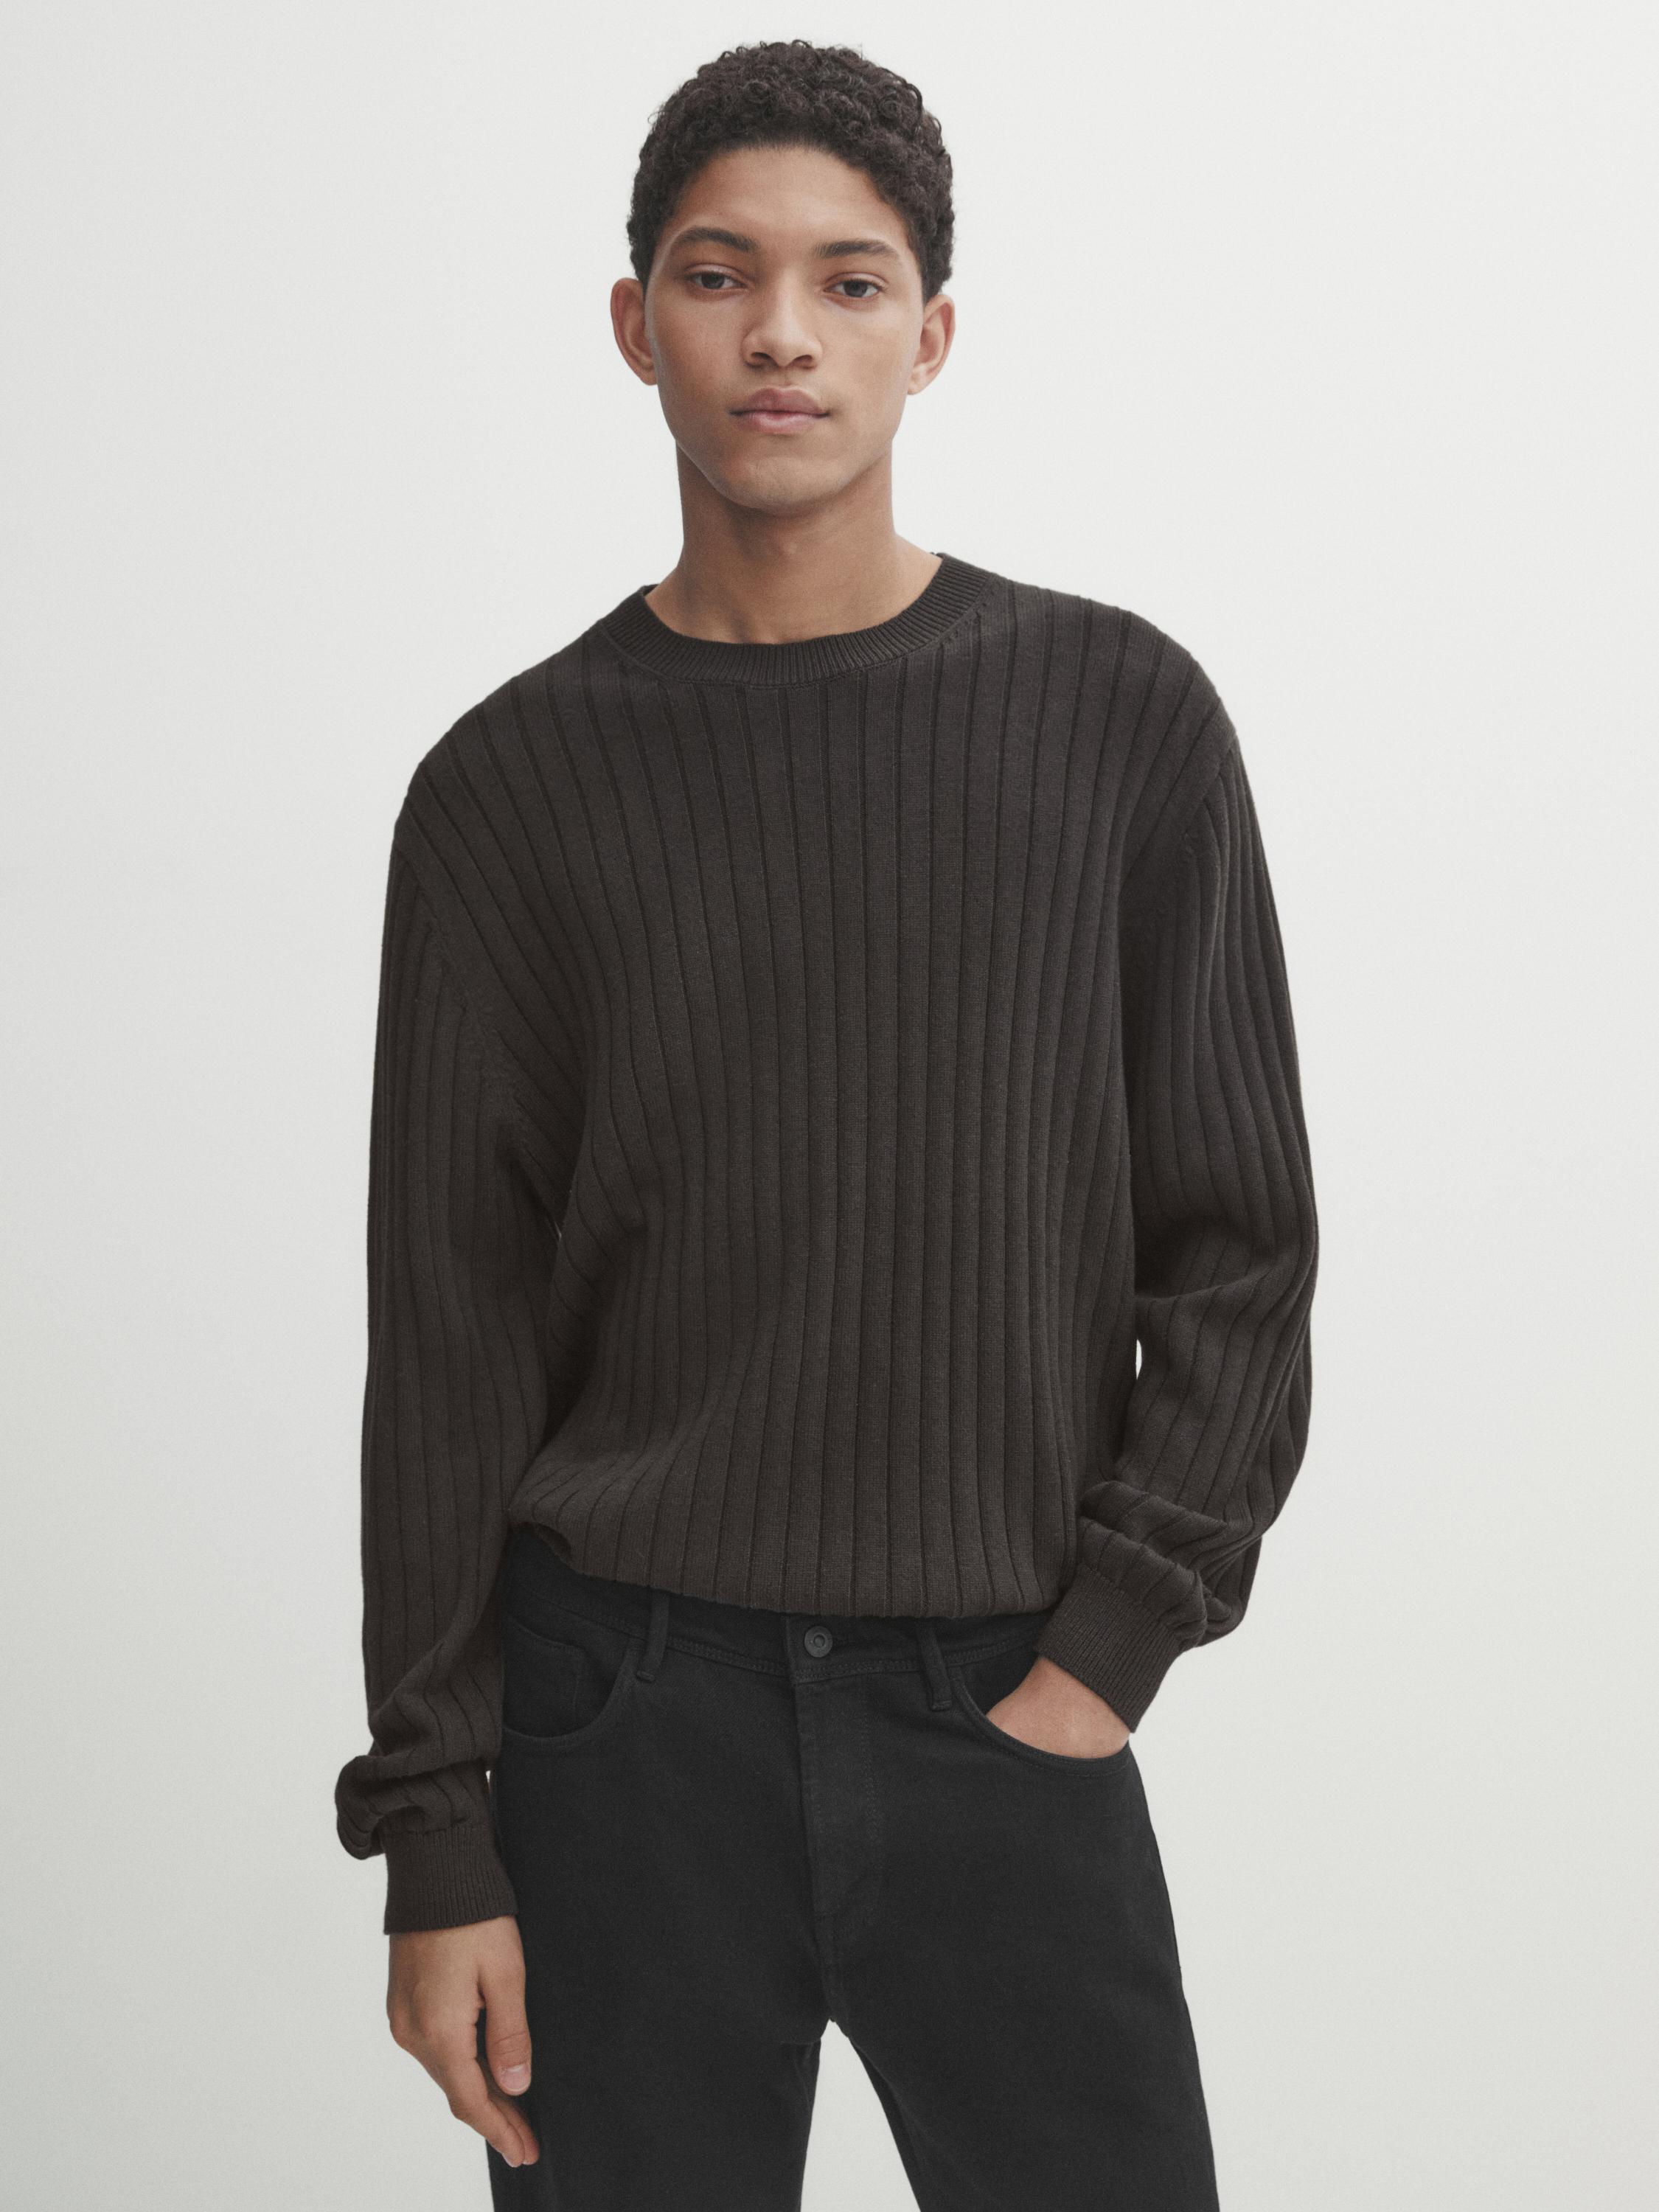 Ribbed cotton blend knit sweater - Beige | ZARA Canada